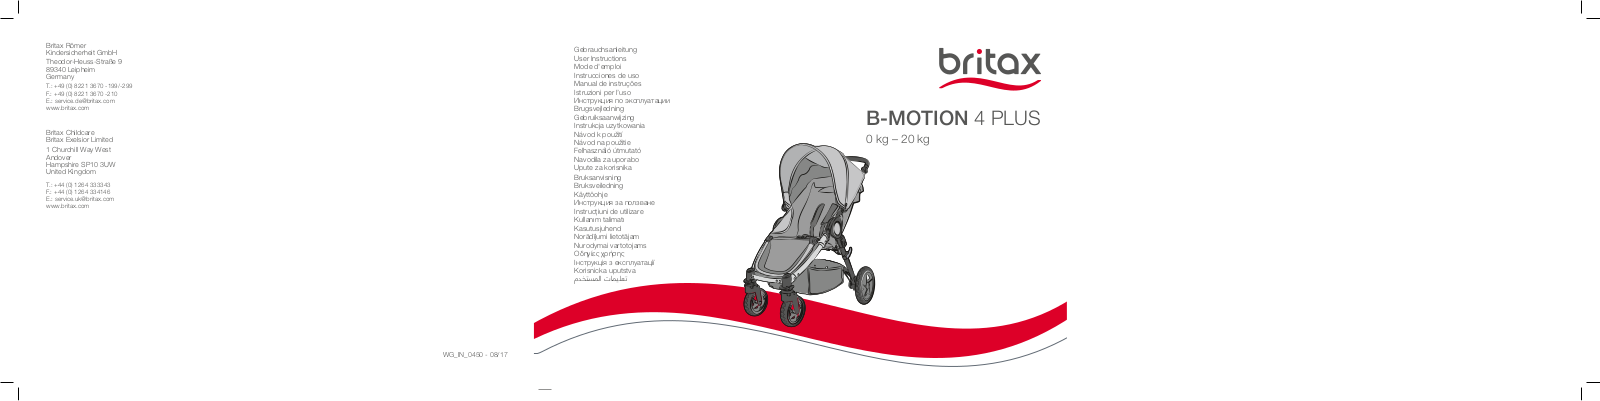 Britax B-Motion 4 Plus Service Manual